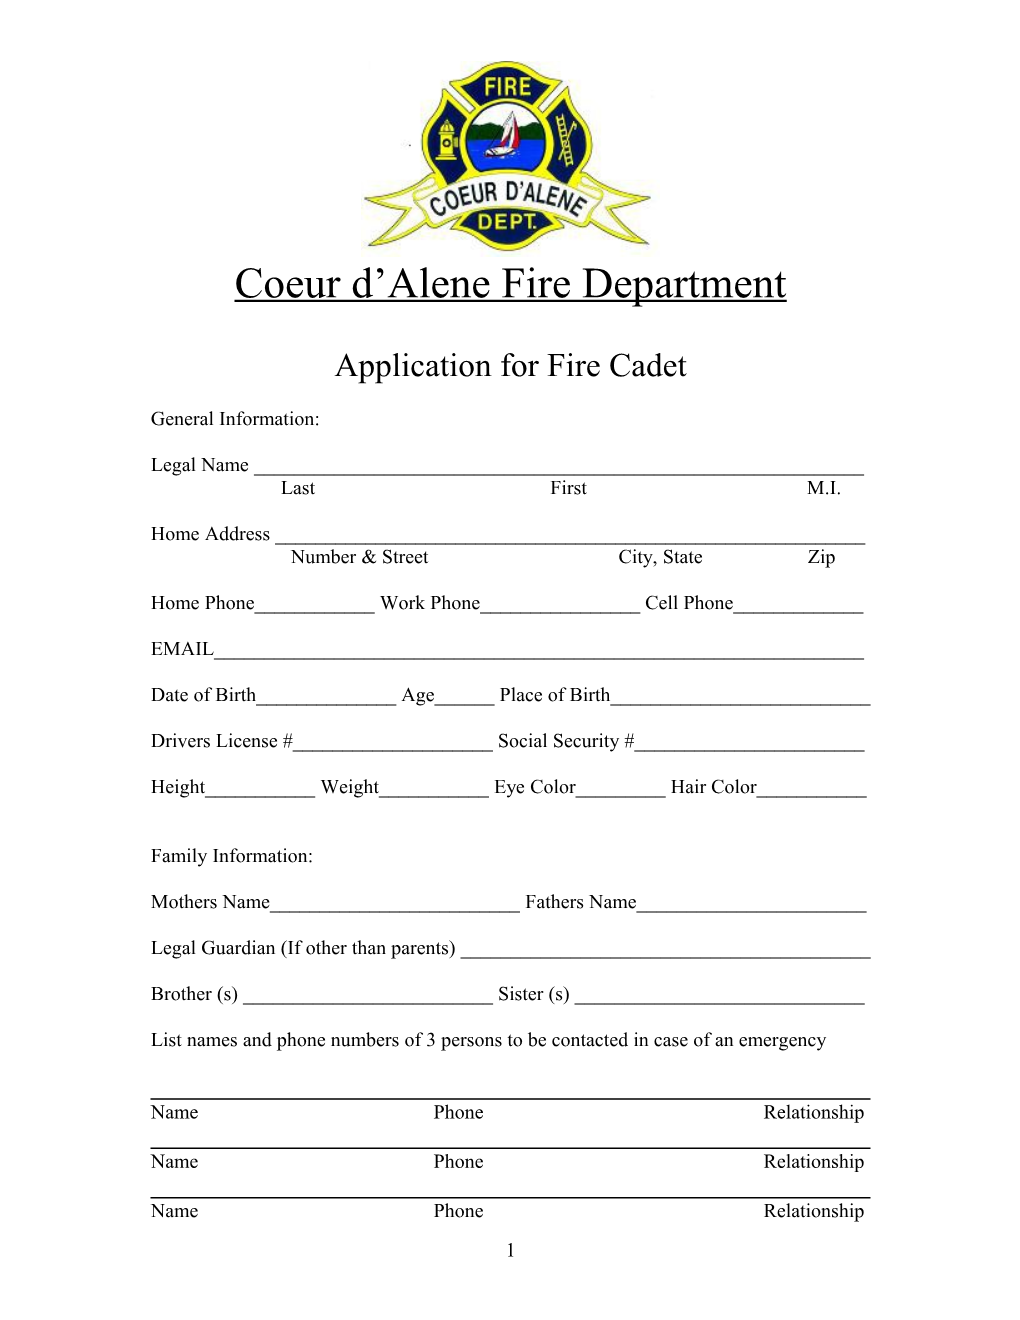 Application for Fire Cadet